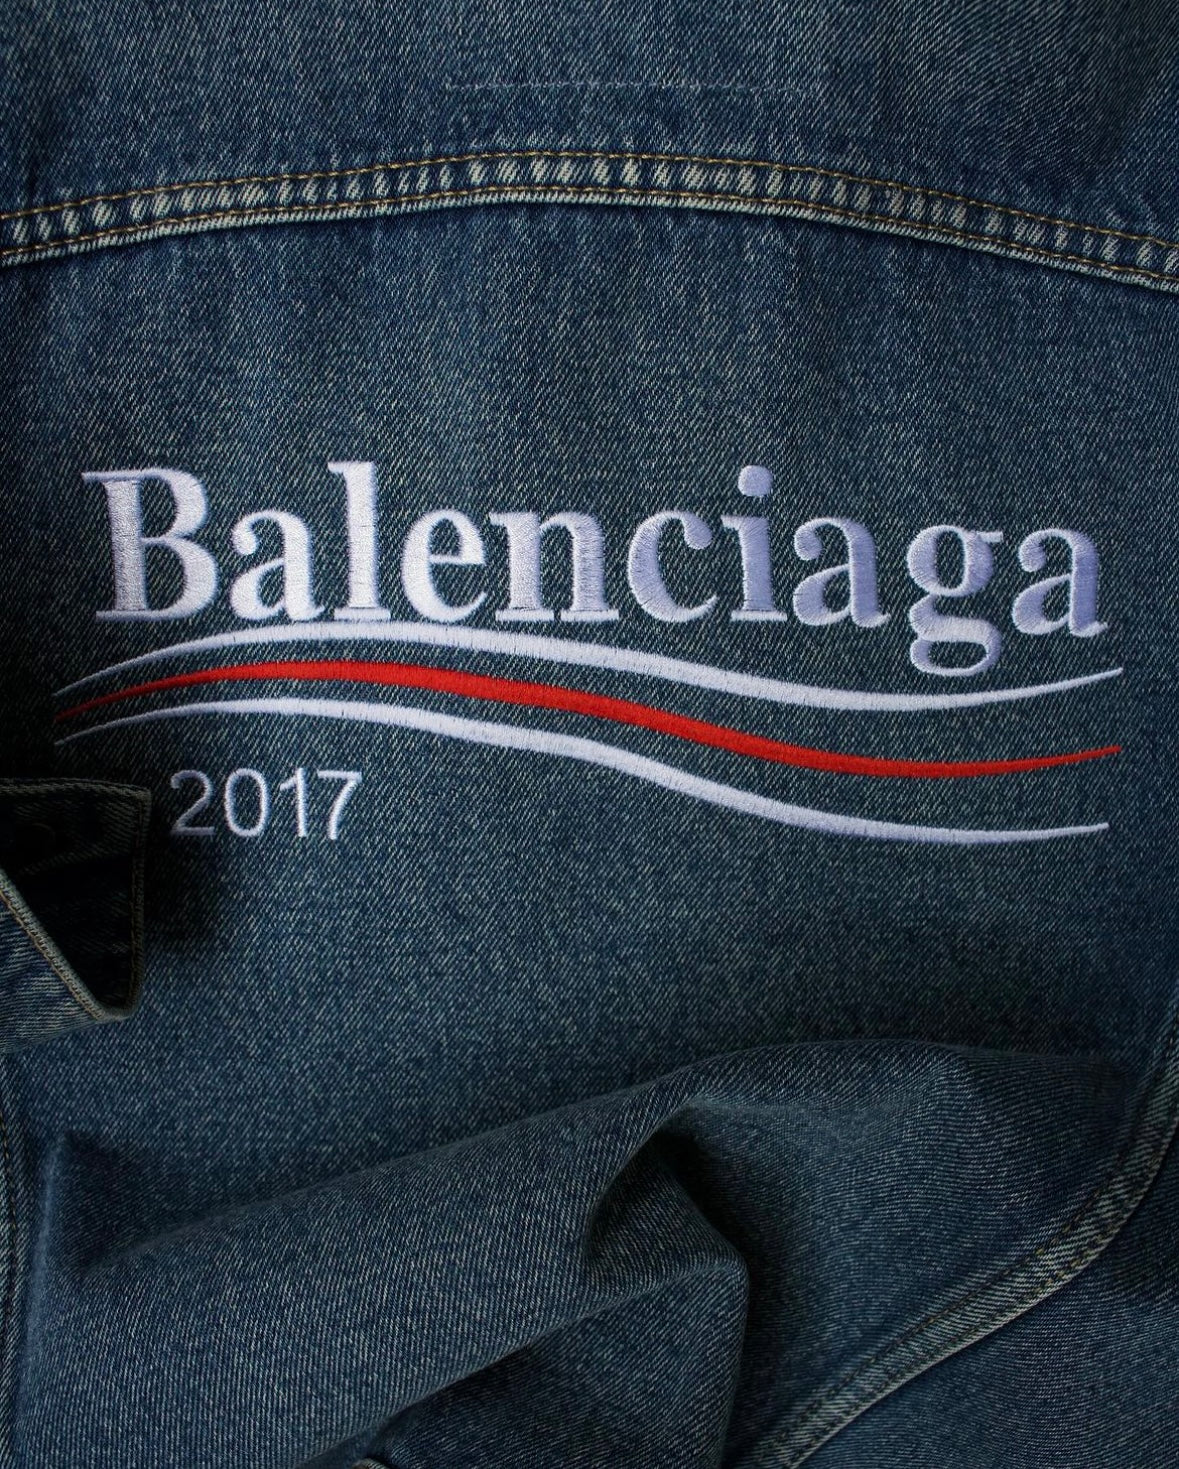 BALENCIAGA AW17 “Bernie Sanders” Campaign Logo Distressed Denim Jacket